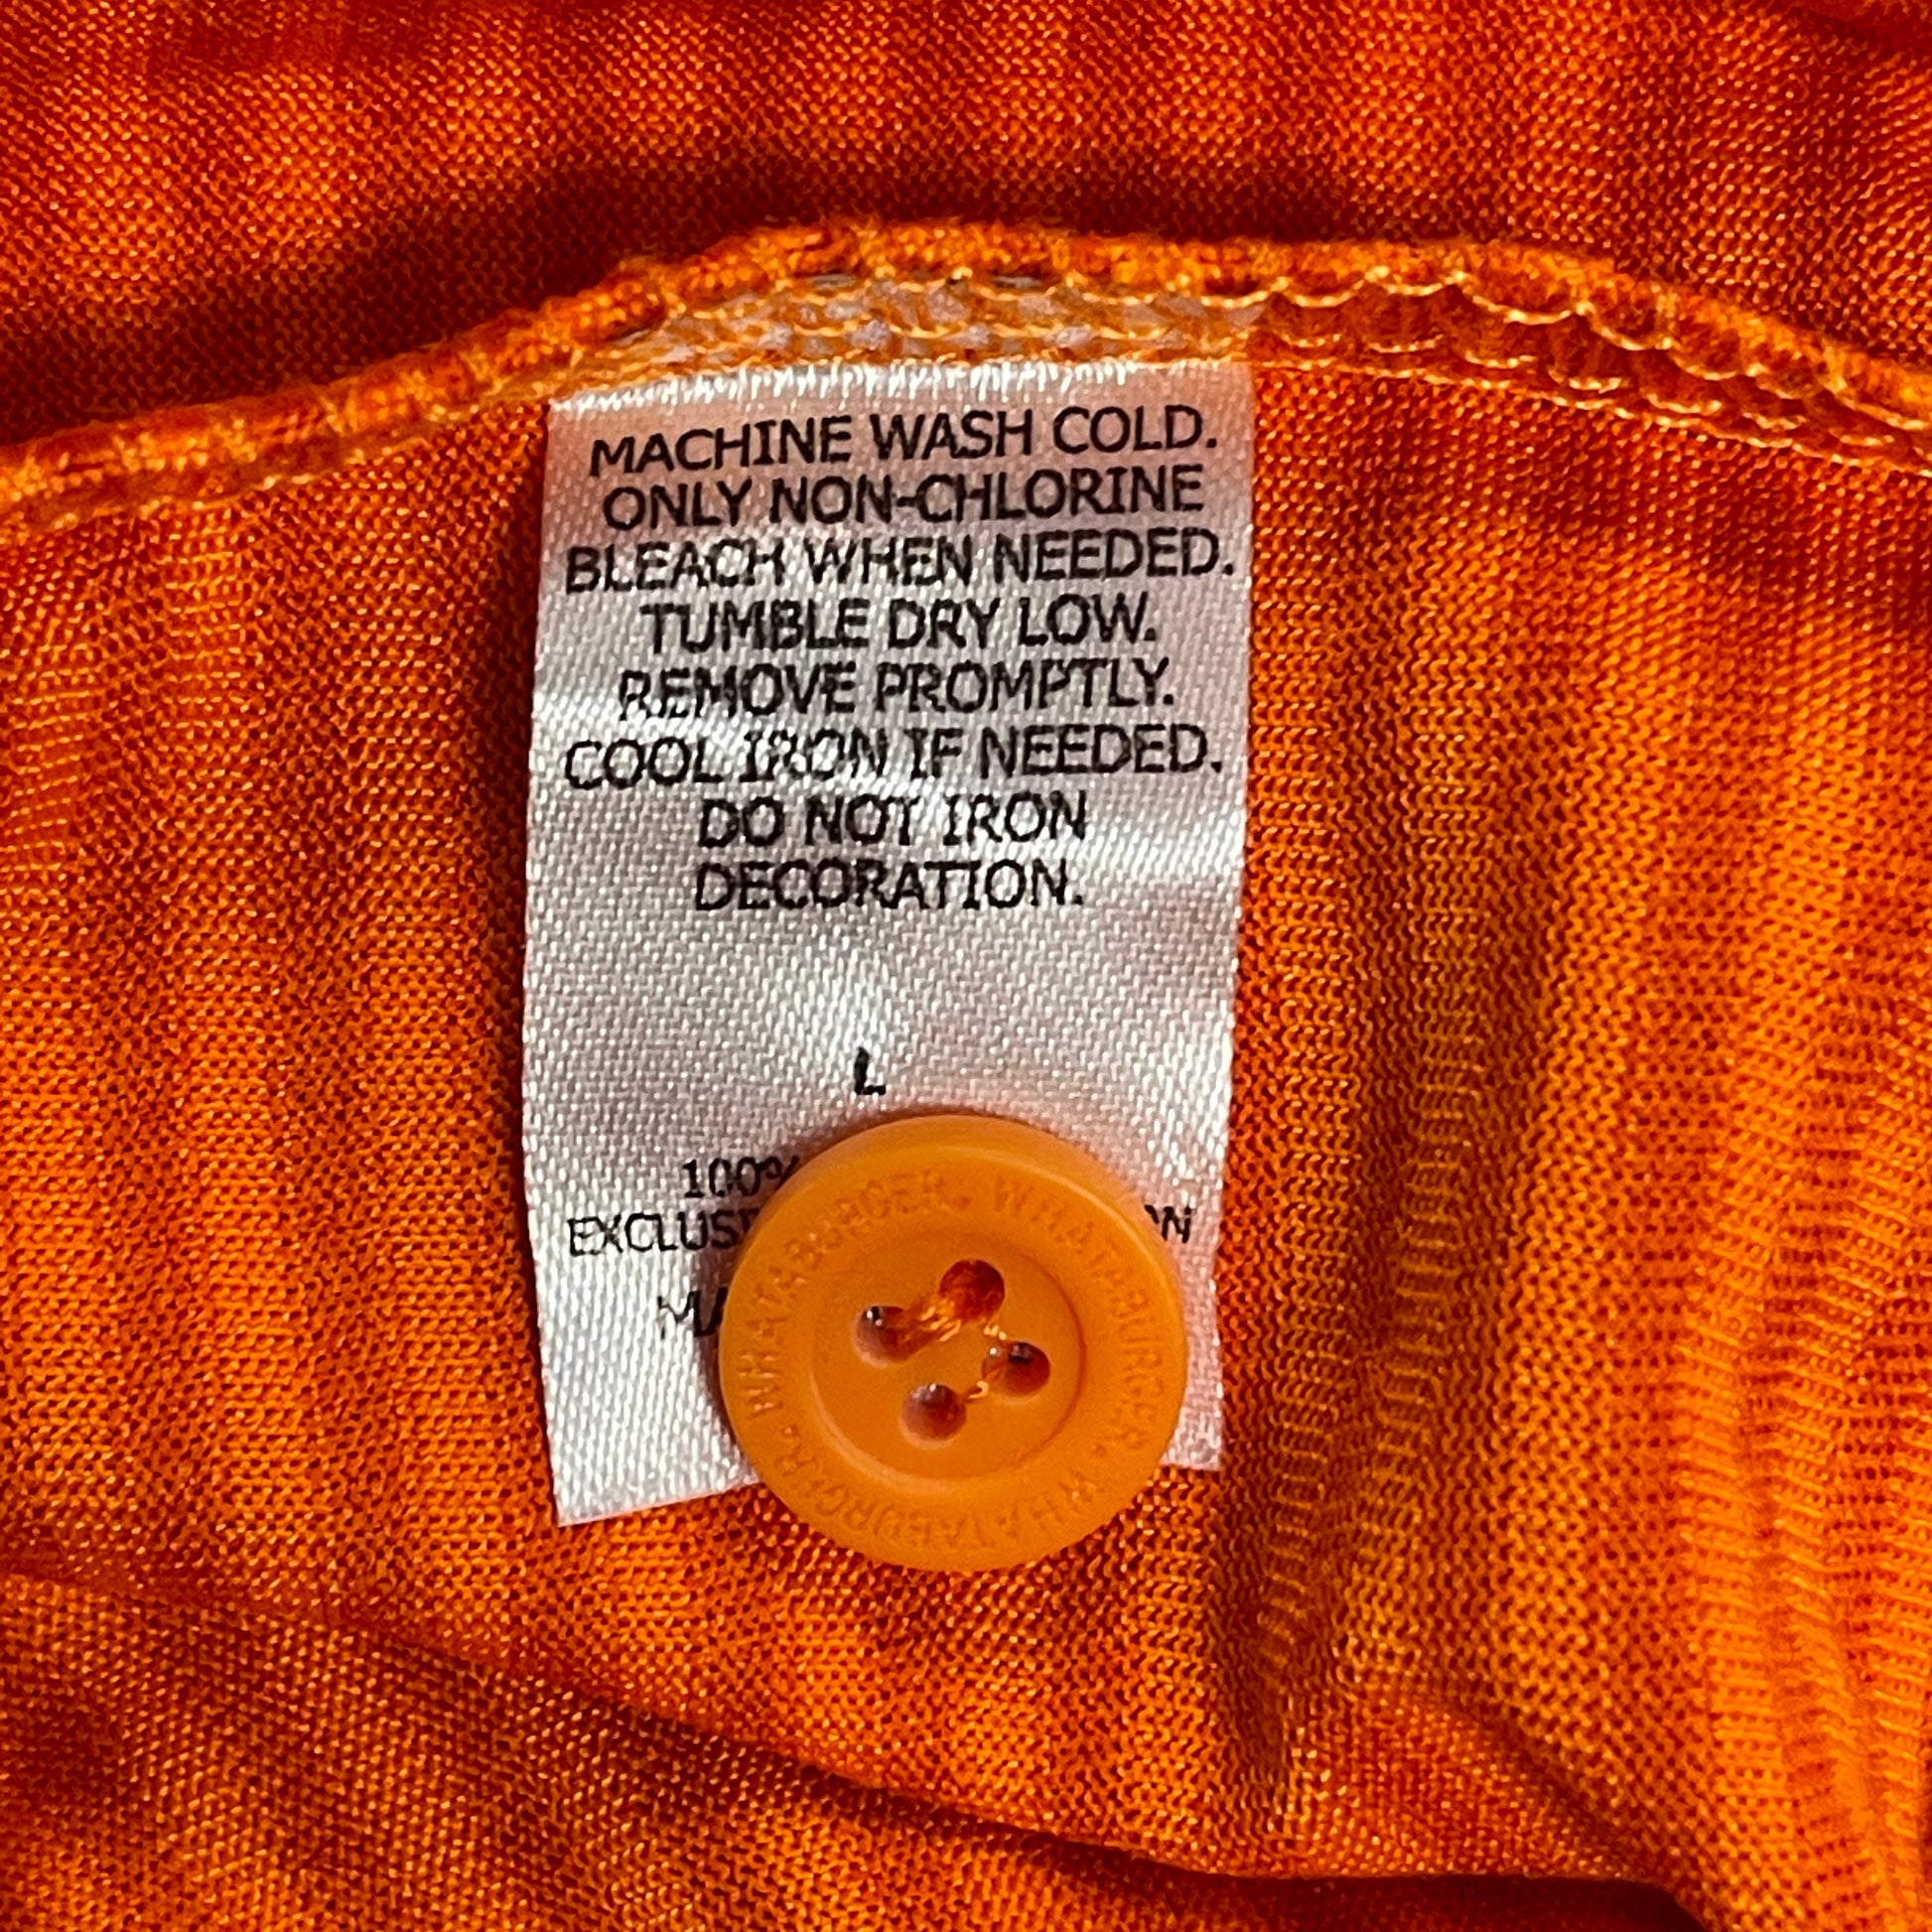 Whataburger Employee Uniform Polo Shirt Men's Medium M Orange